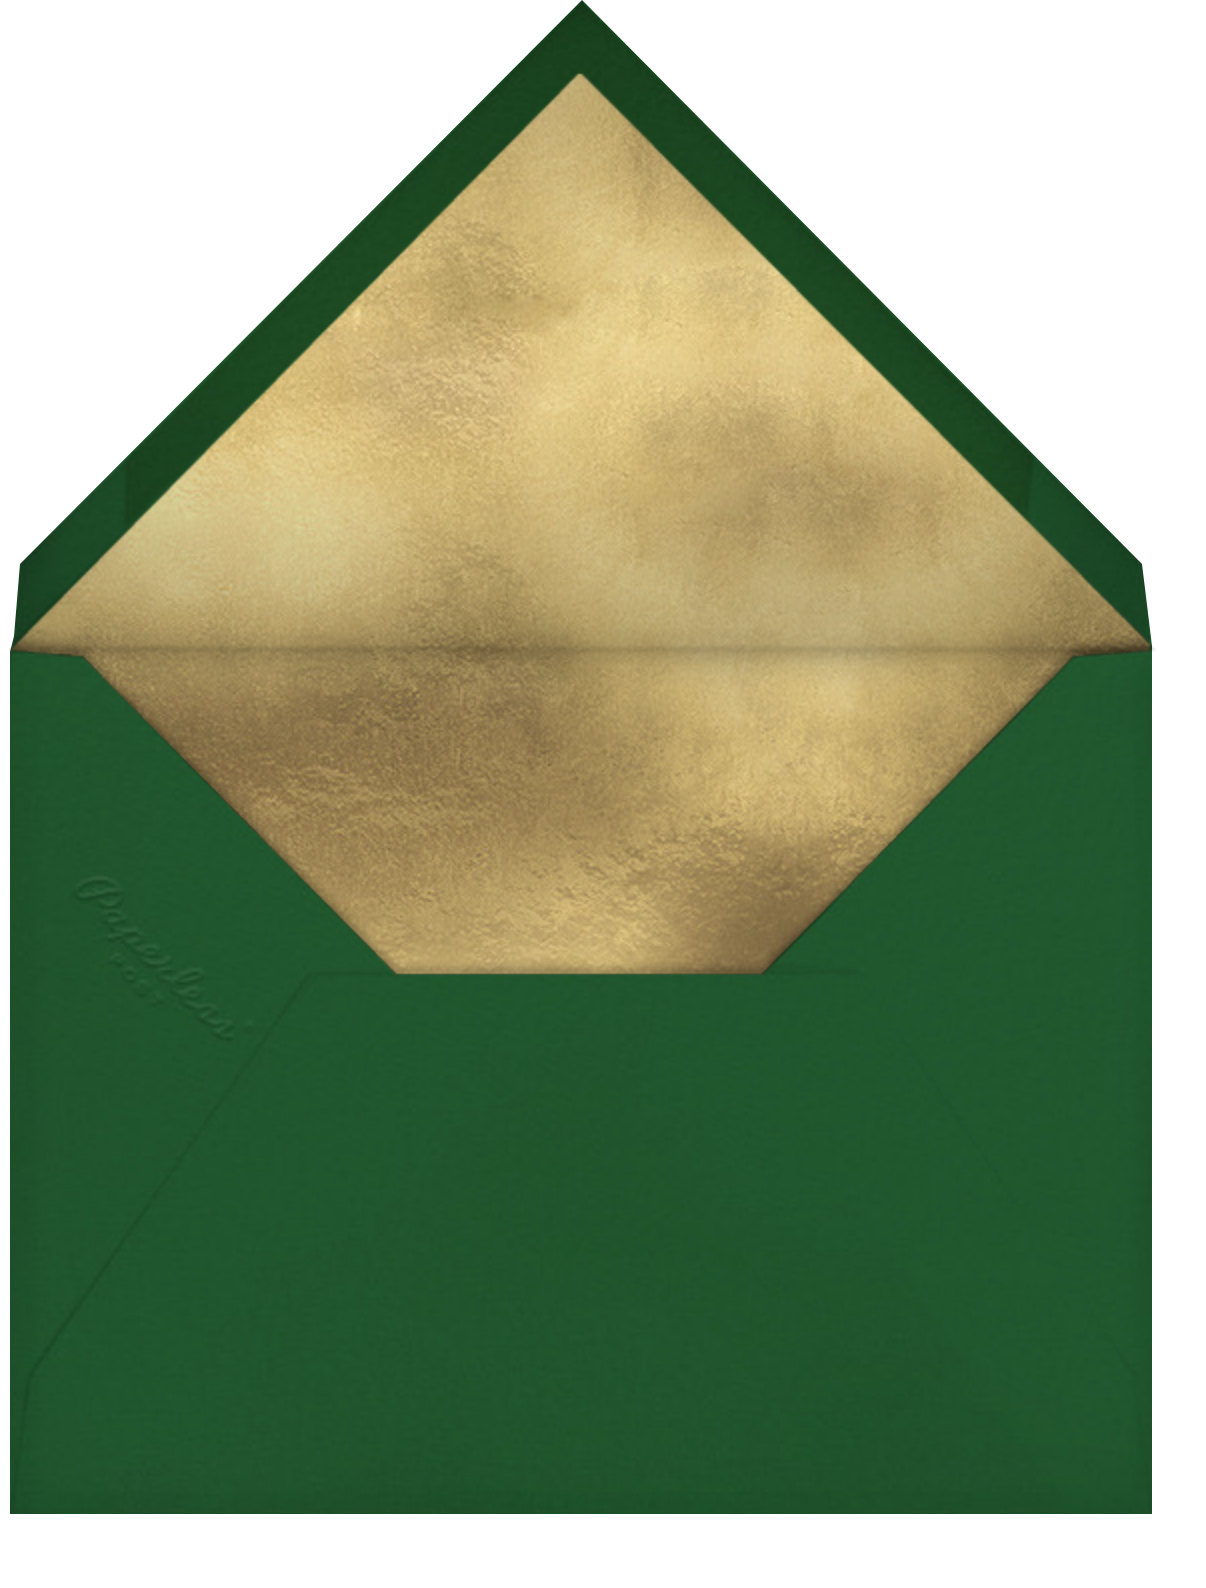 Totally Trimmed (Danielle Kroll) - Red Cap Cards - Envelope